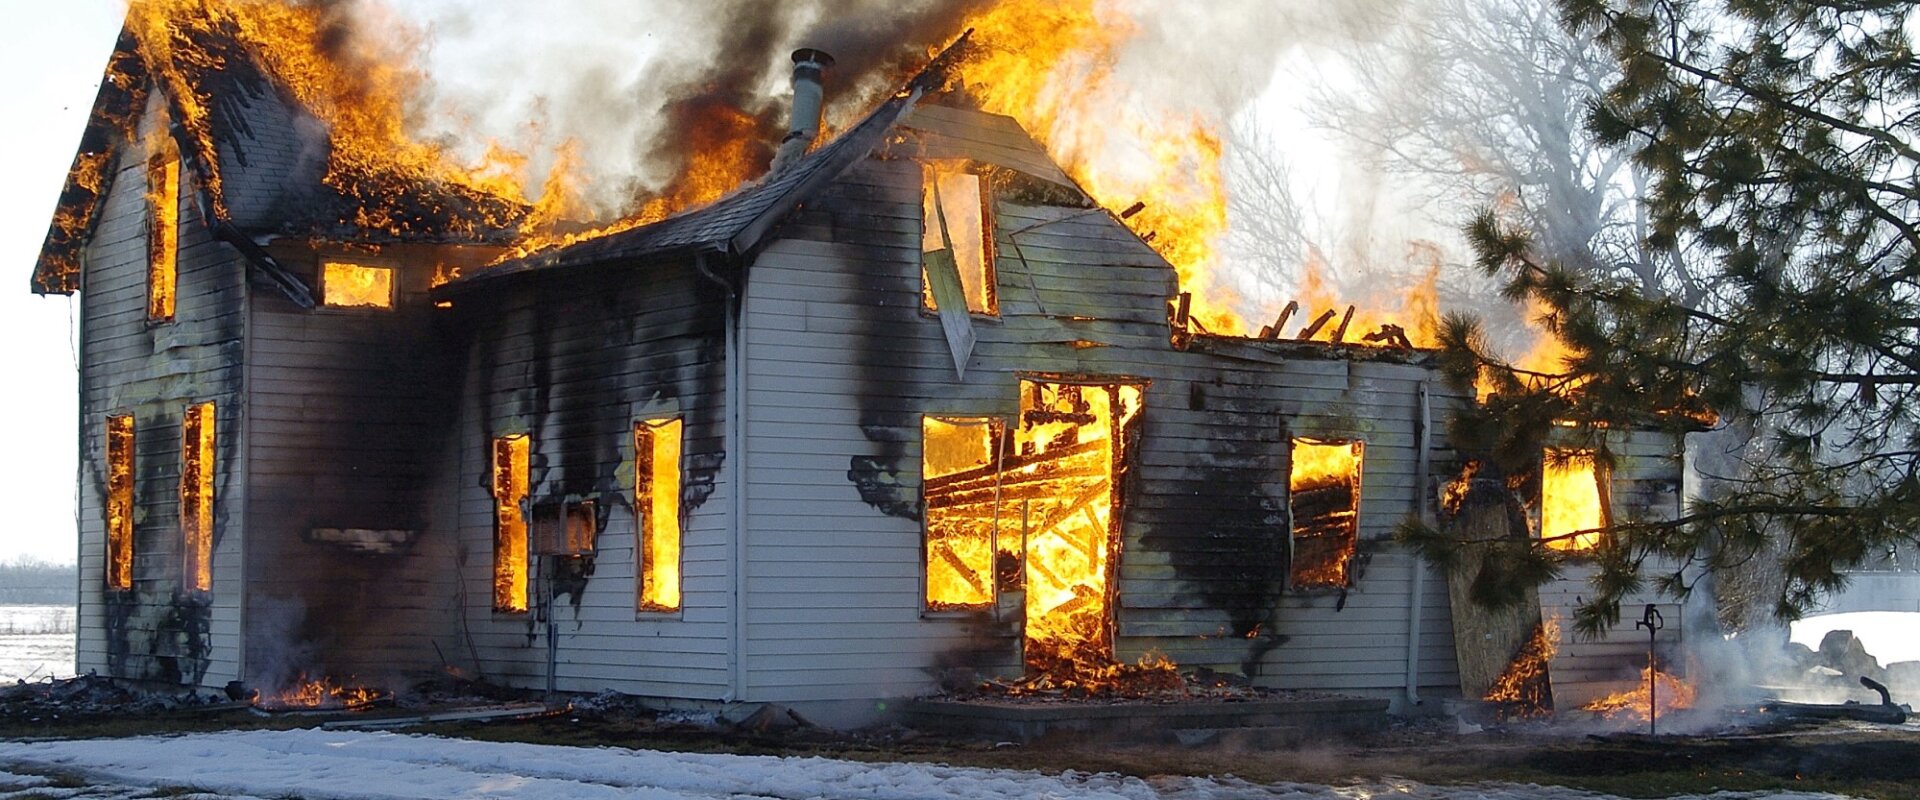 Fire-Damaged Home